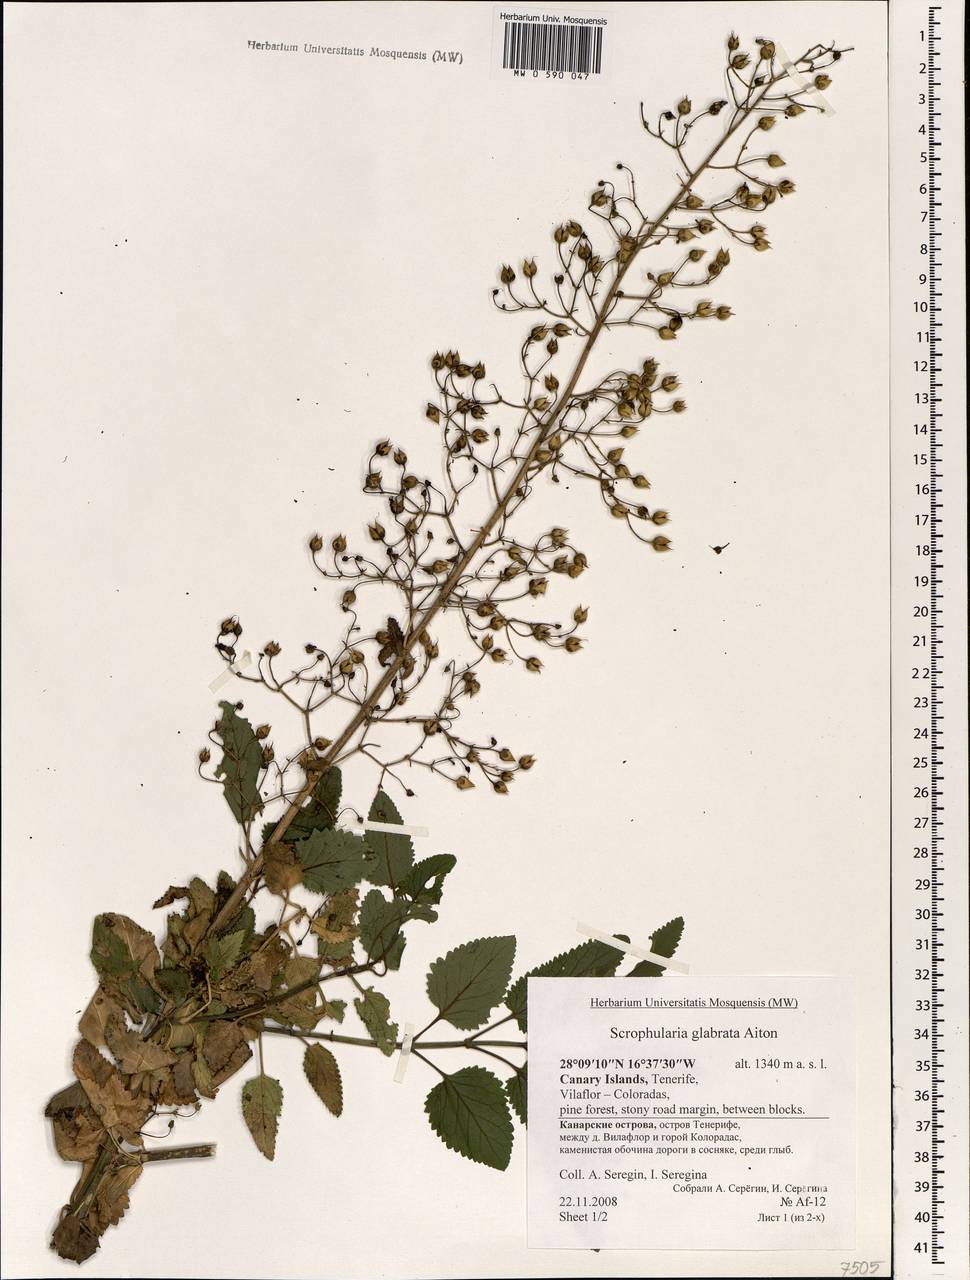 Scrophularia glabrata Aiton, Африка (AFR) (Испания)